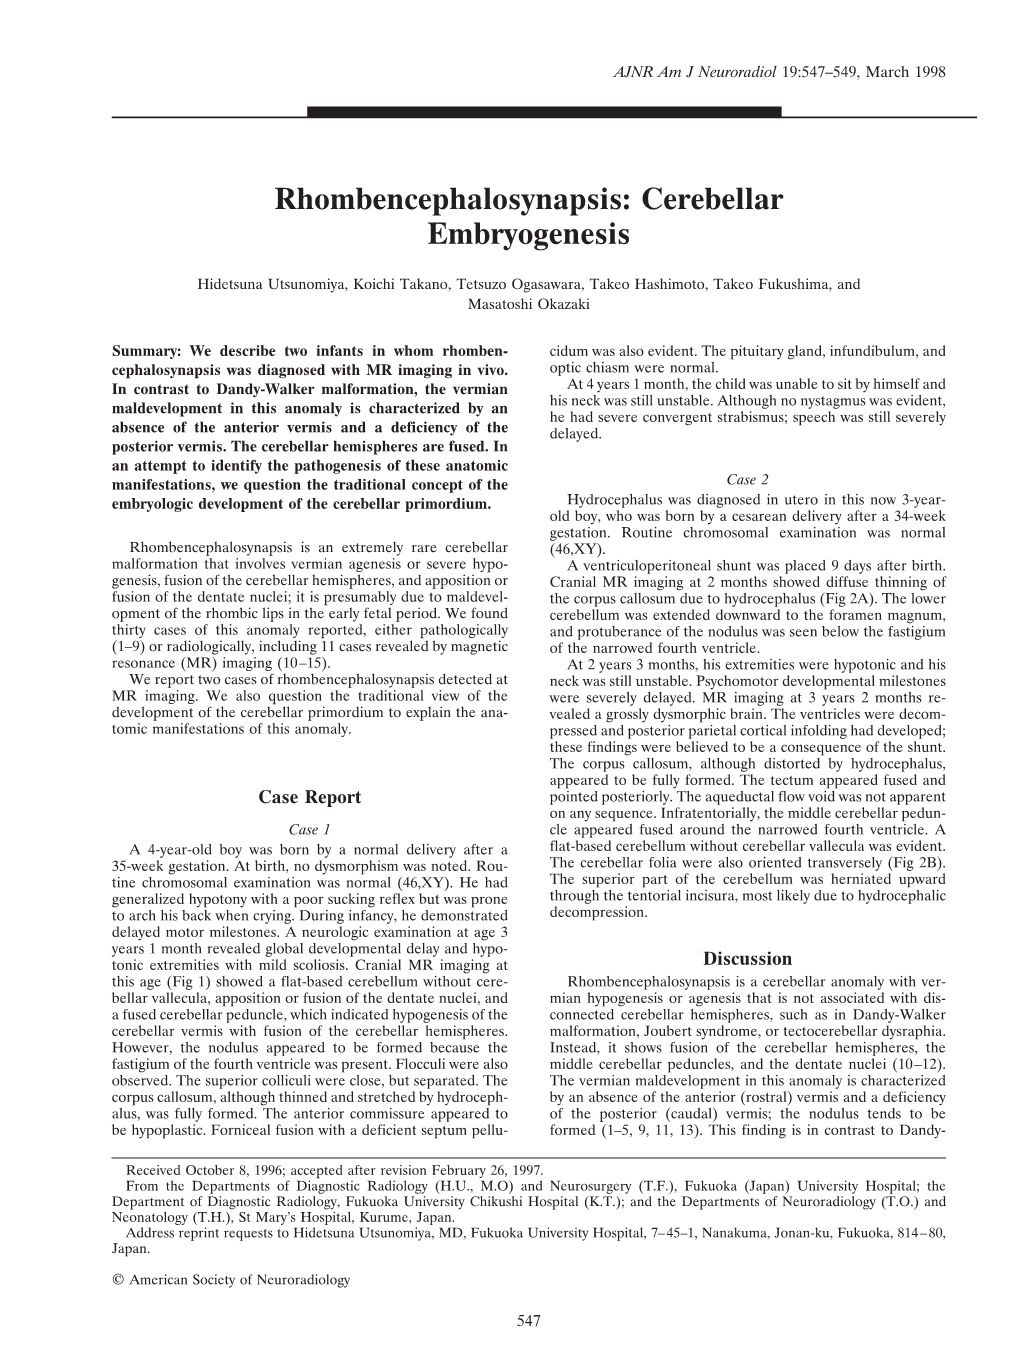 Rhombencephalosynapsis: Cerebellar Embryogenesis